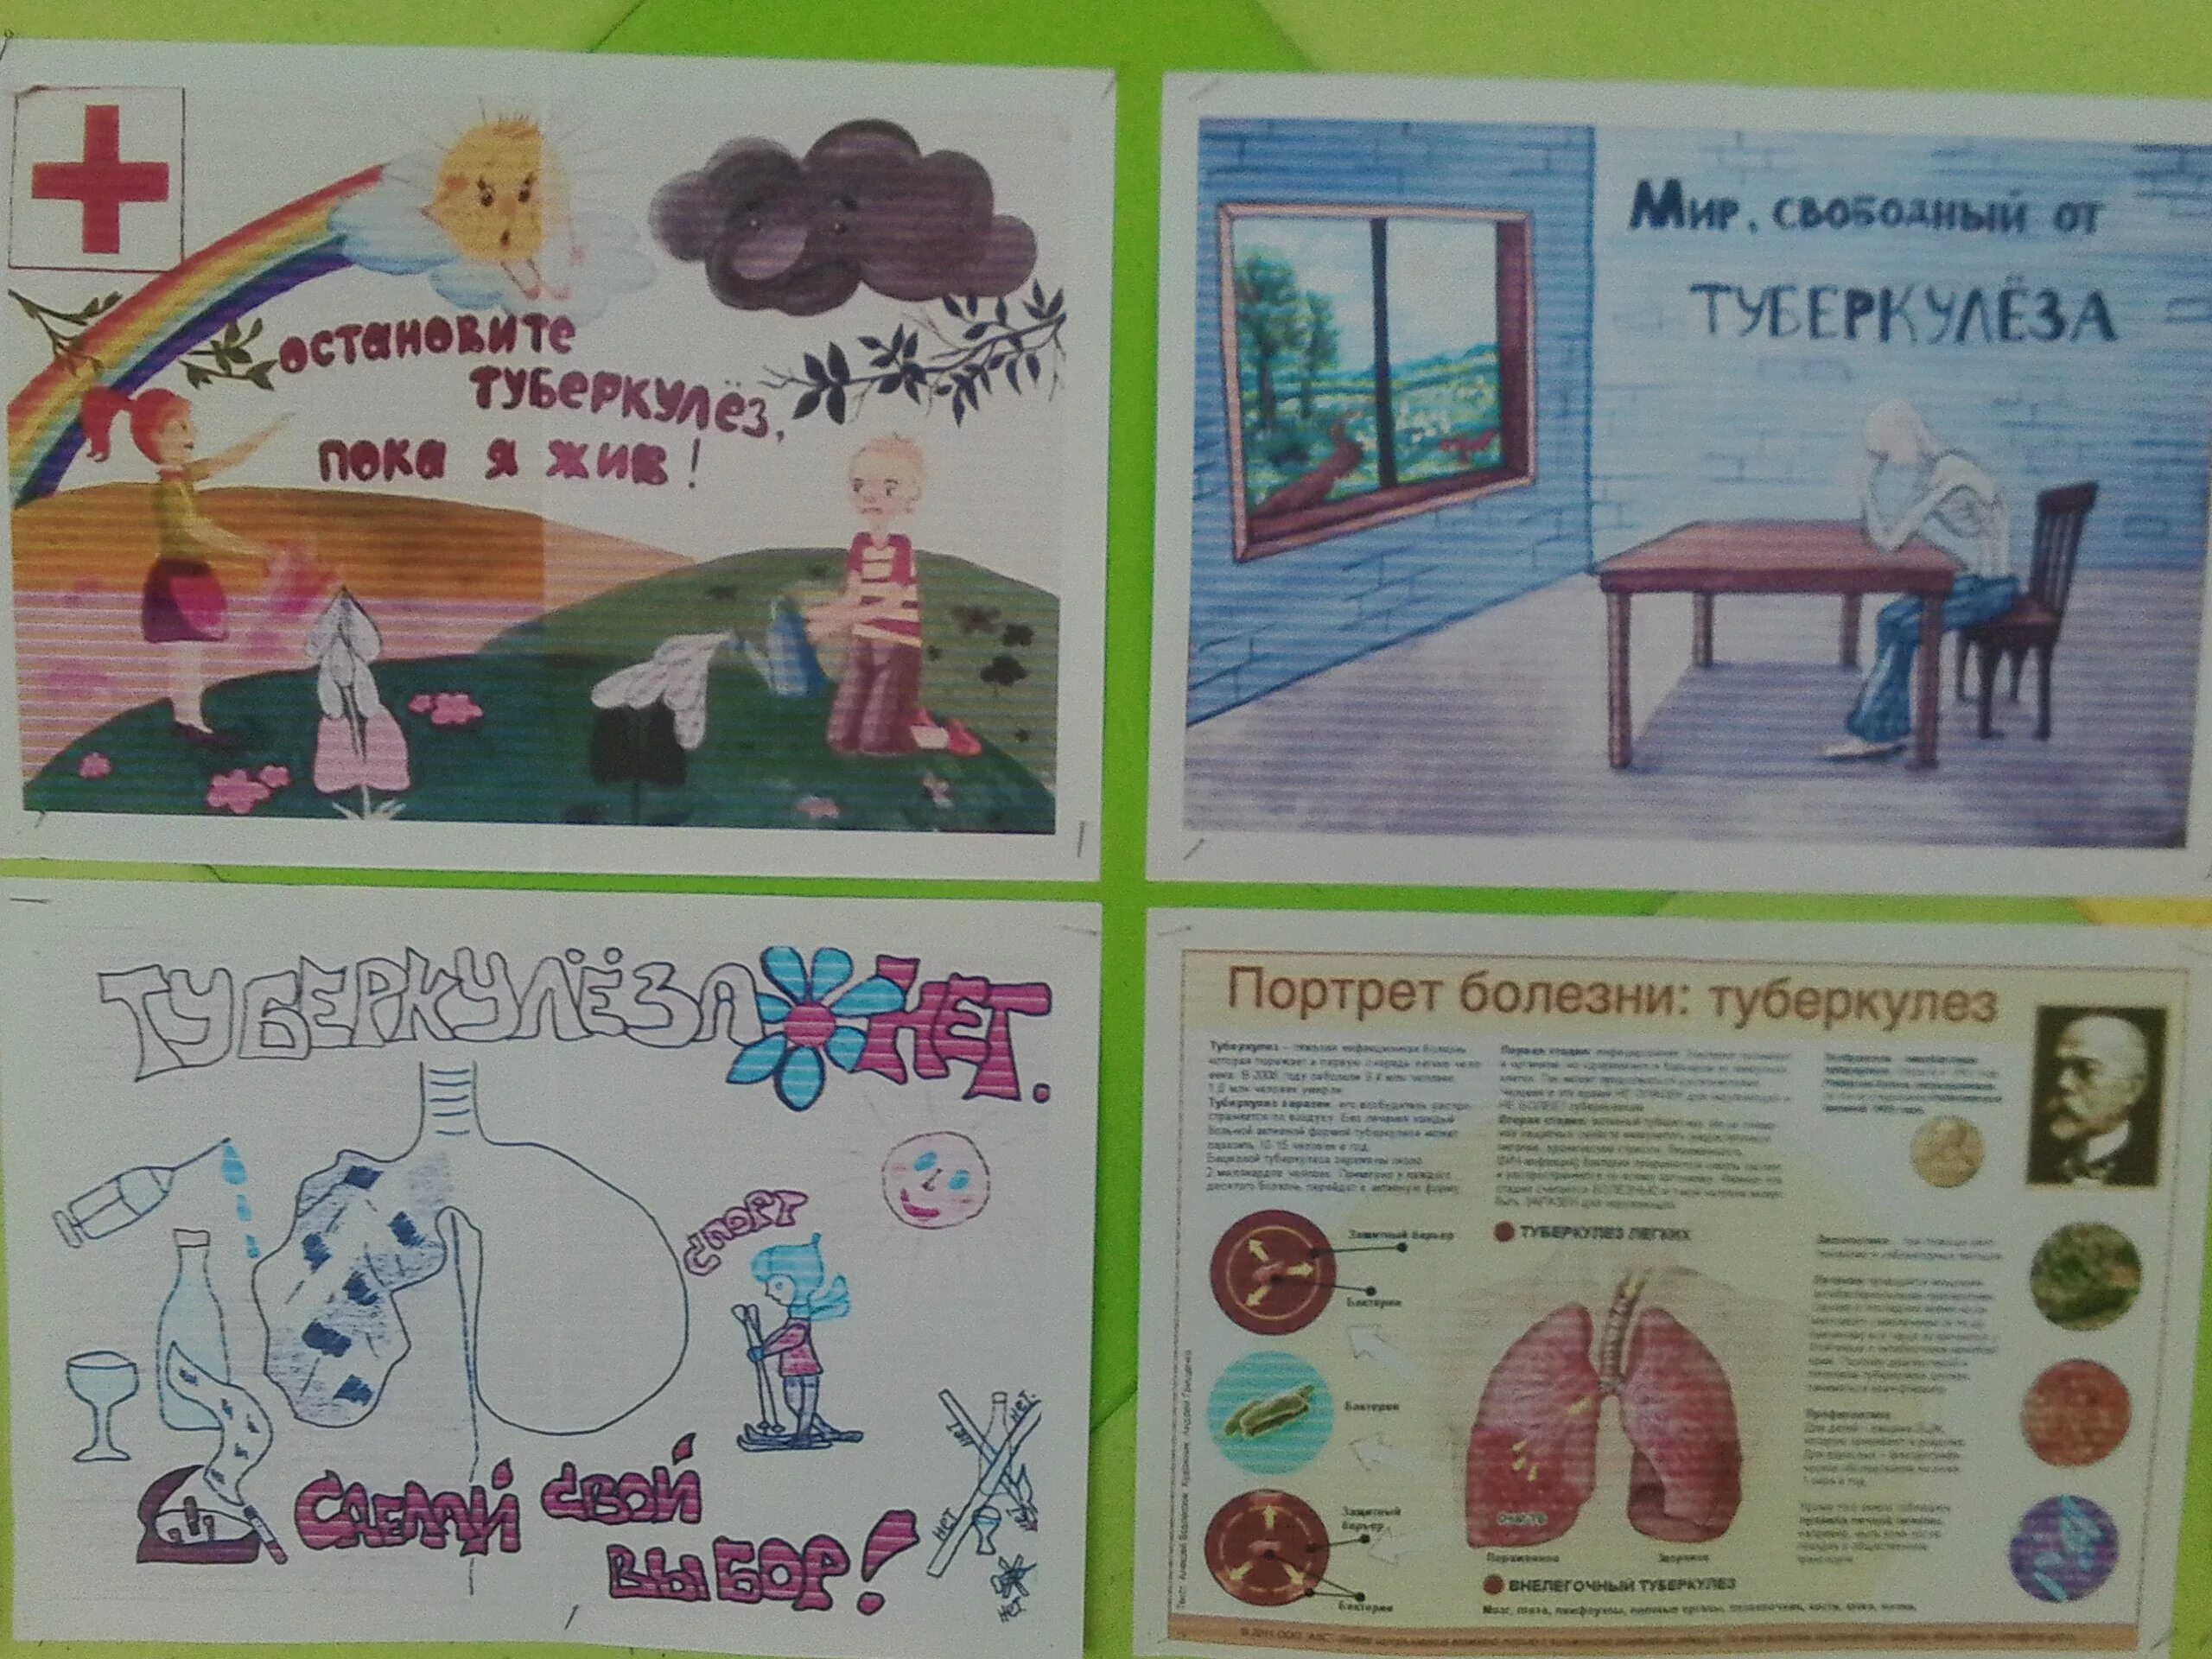 Конкурс туберкулез. Плакат по туберкулезу. Туберкулез рисунок. Плакат остановим туберкулез. Туберкулез плакат для детей.